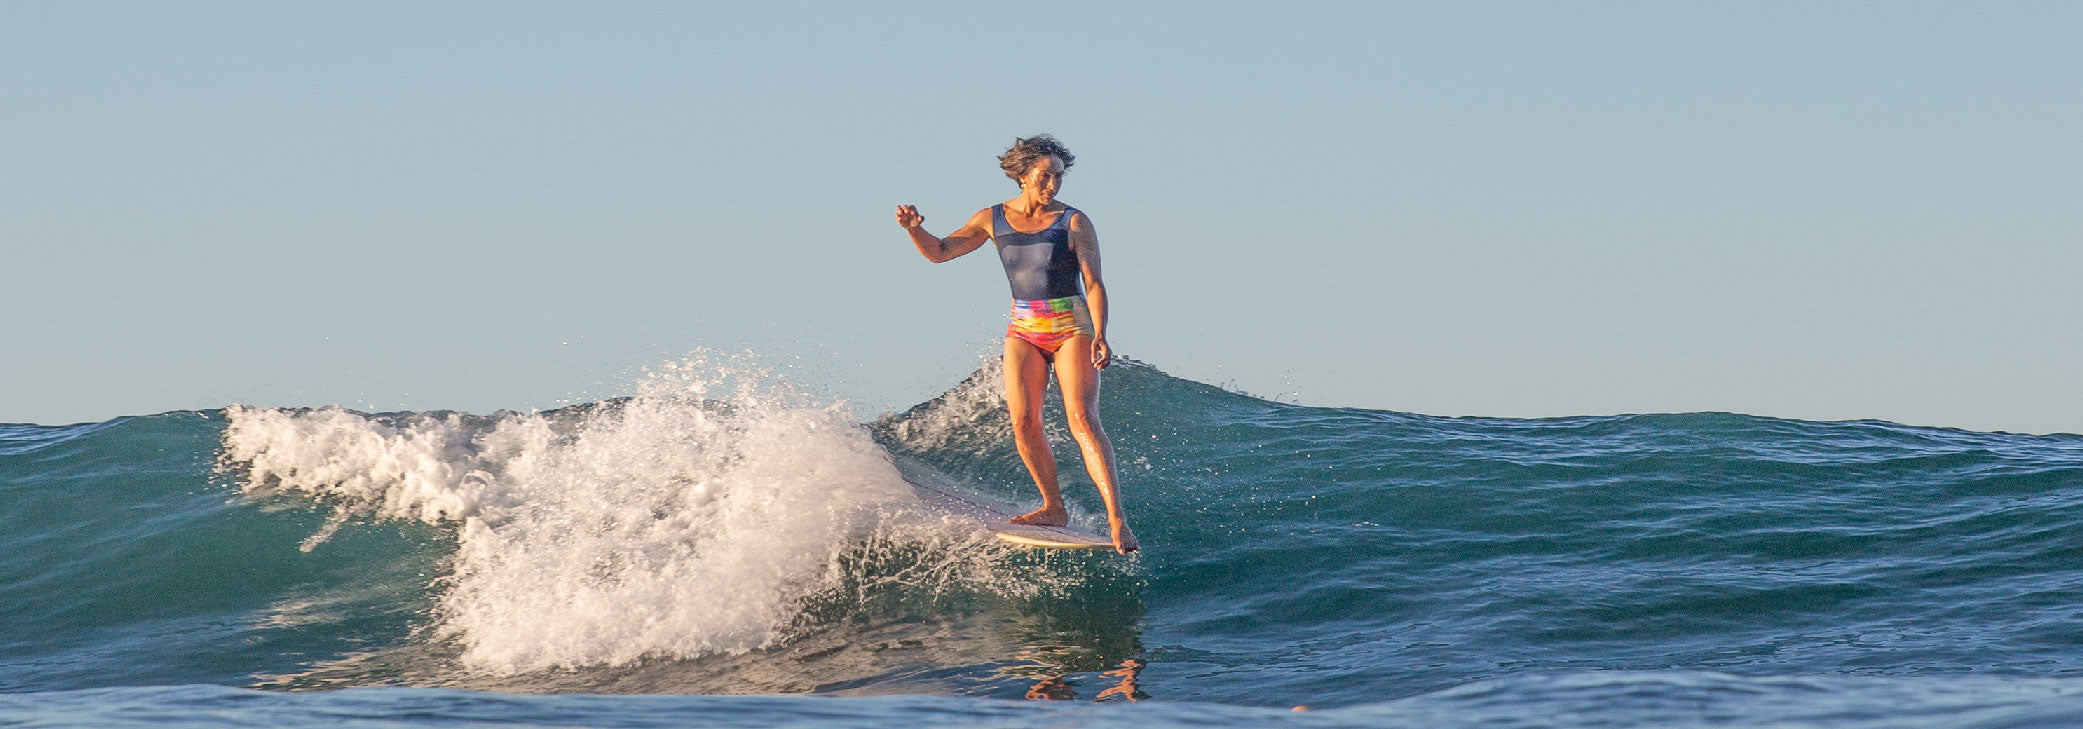 surf longboard women Mexico surf trip one piece swimsuit colorful blue